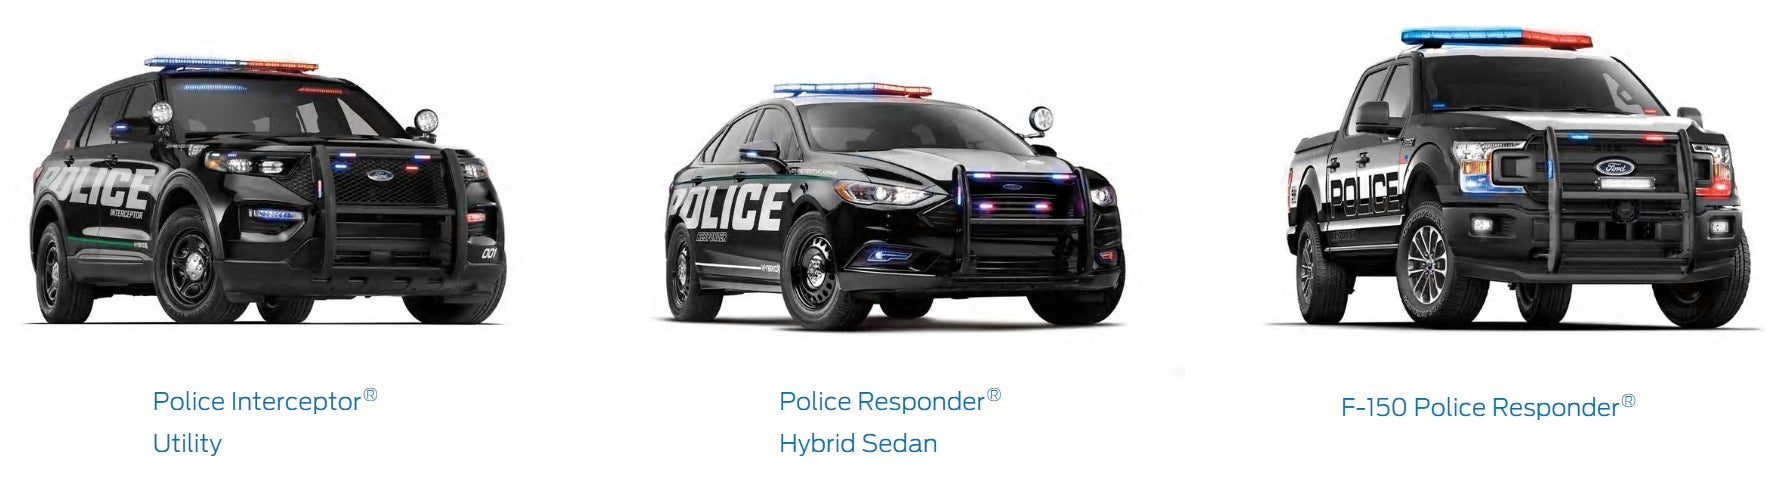 Ford police vehicles-Interceptor Utility, Responder Hybrid Sedan, F-150 Responder